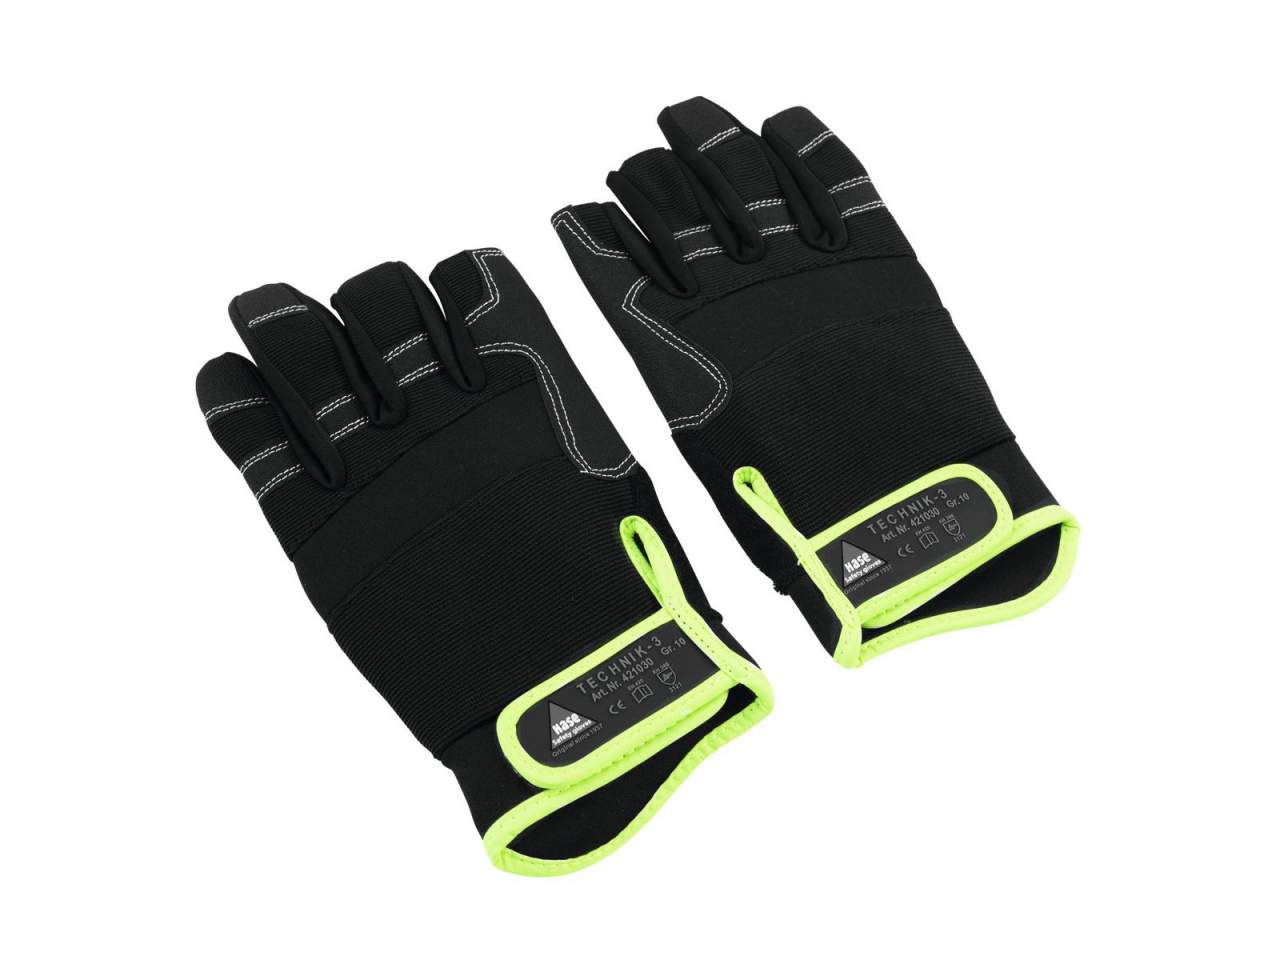 HASE Handschuh 3 Finger- Grsse XL unter HASE